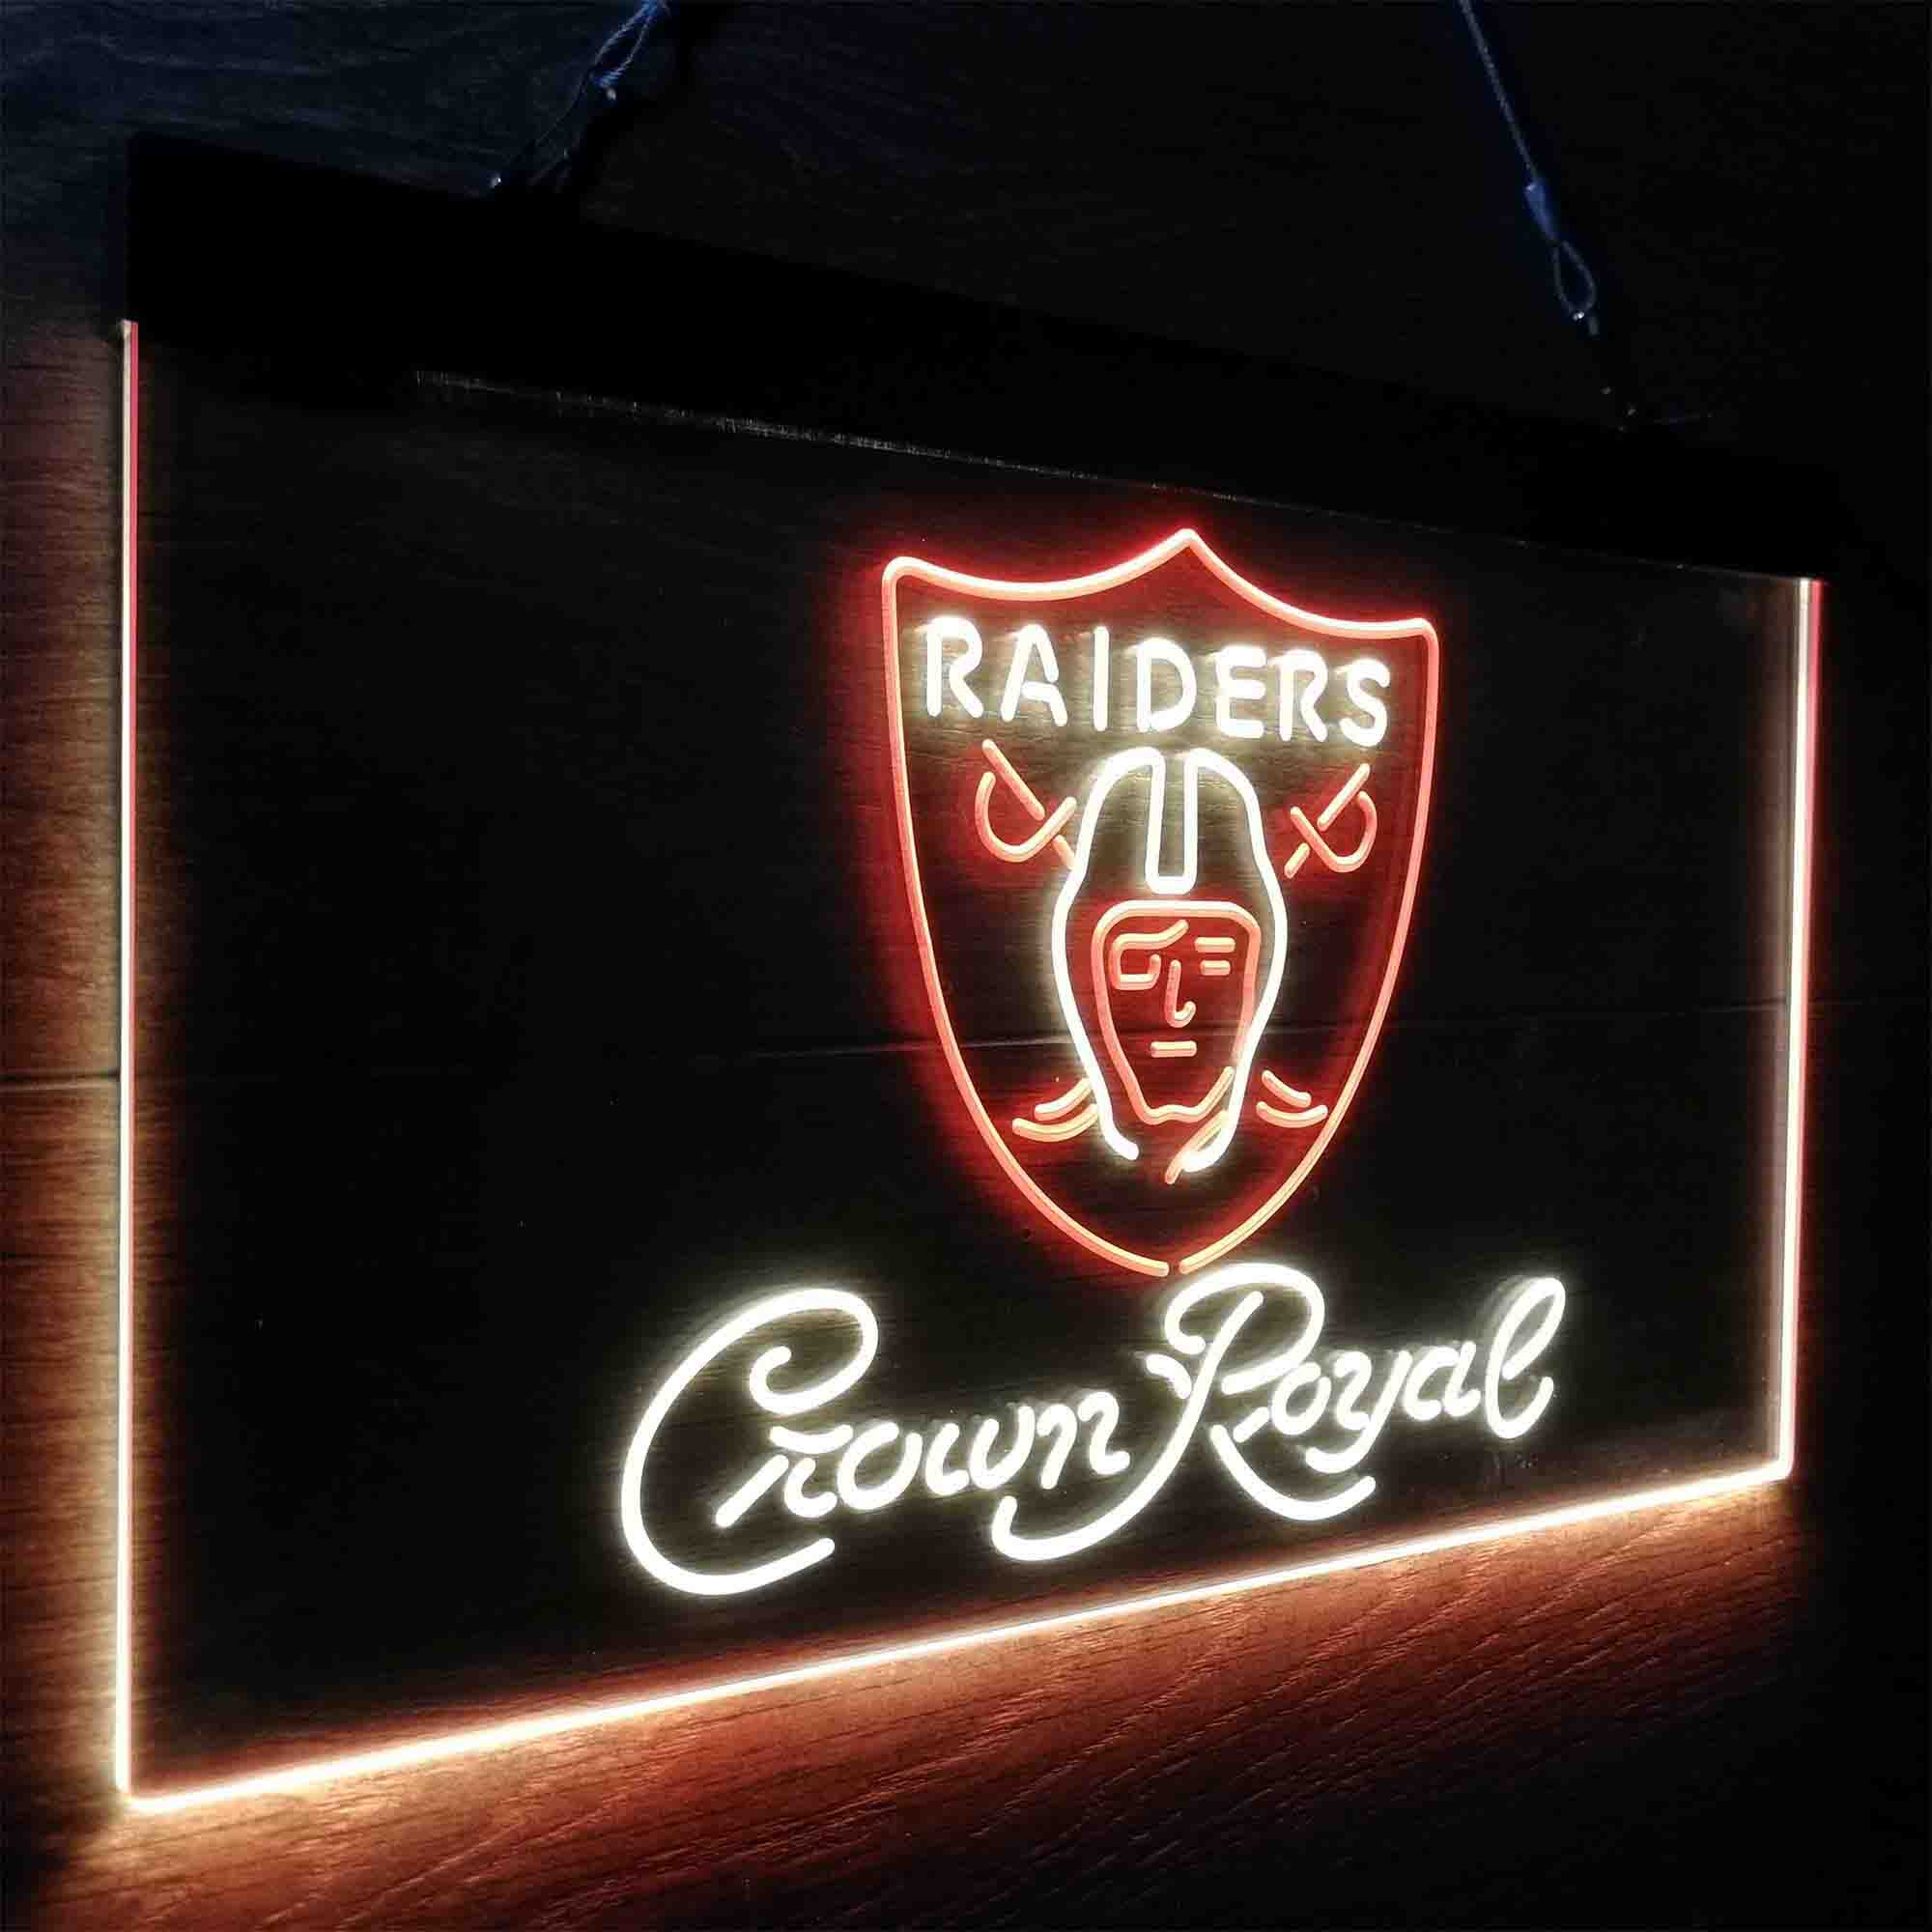 Crown Royal Bar Oakland Raiders Est. 1960 LED Neon Sign